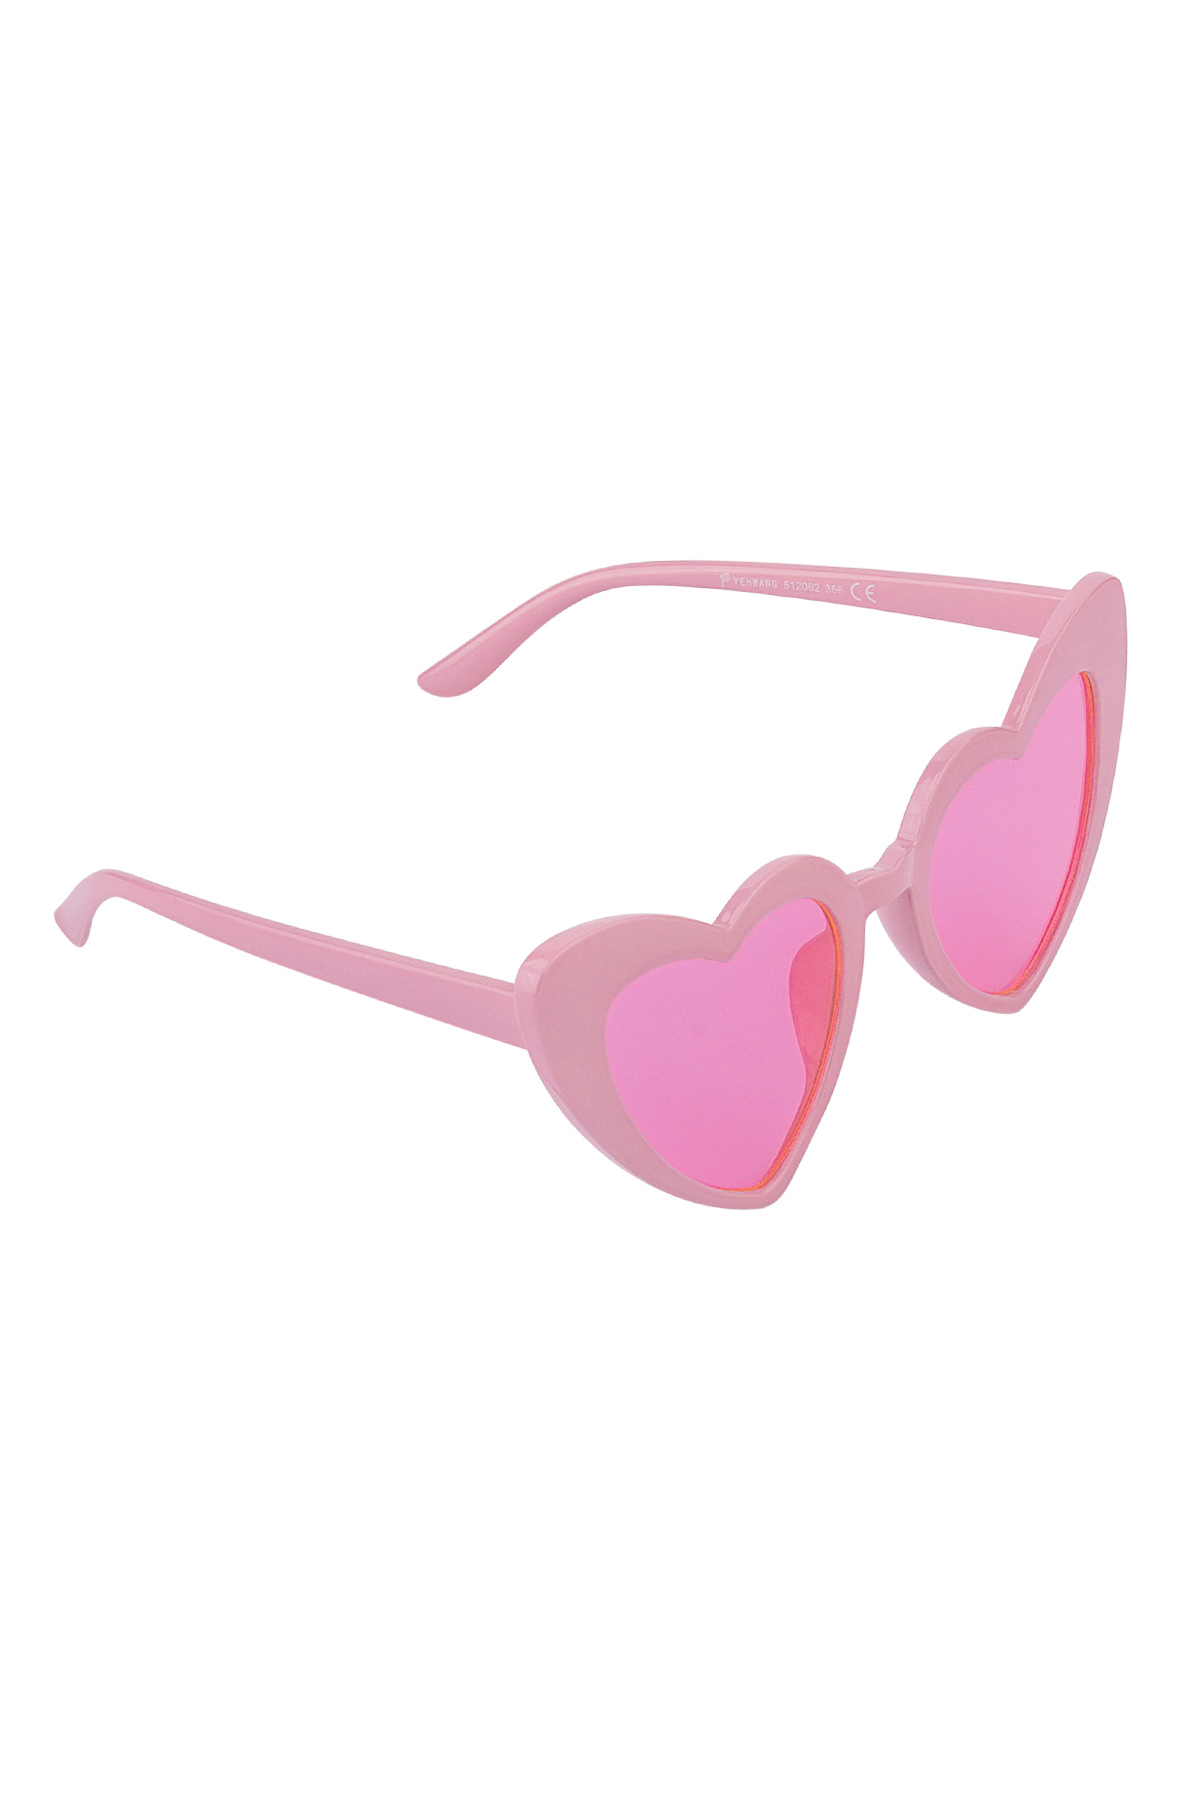 Sunglasses love is in the air - fuchsia